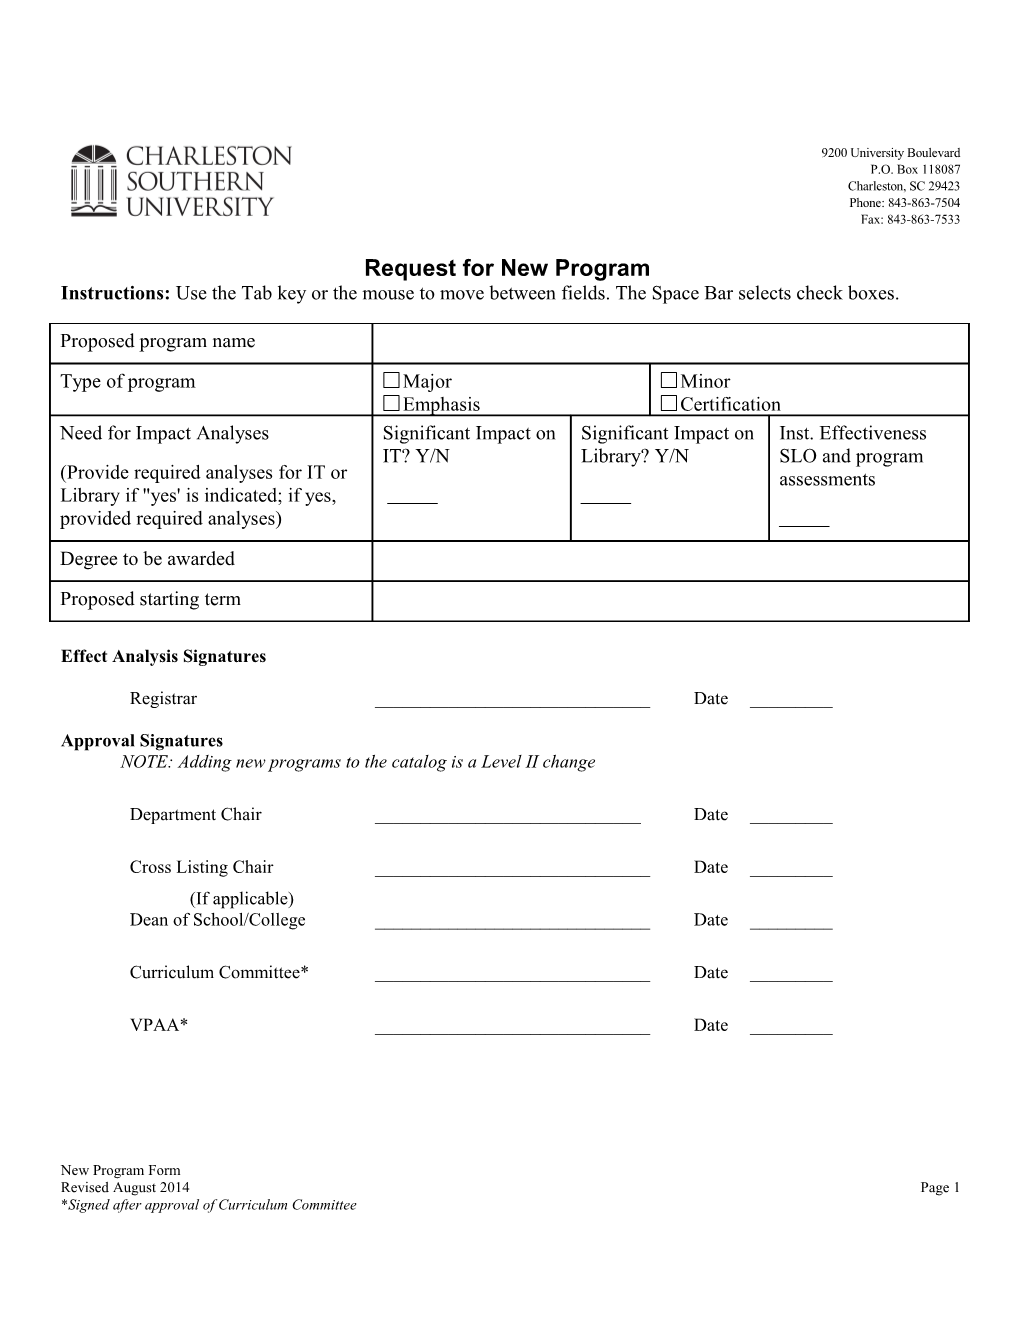 Signature Form: Request for New Academic Program